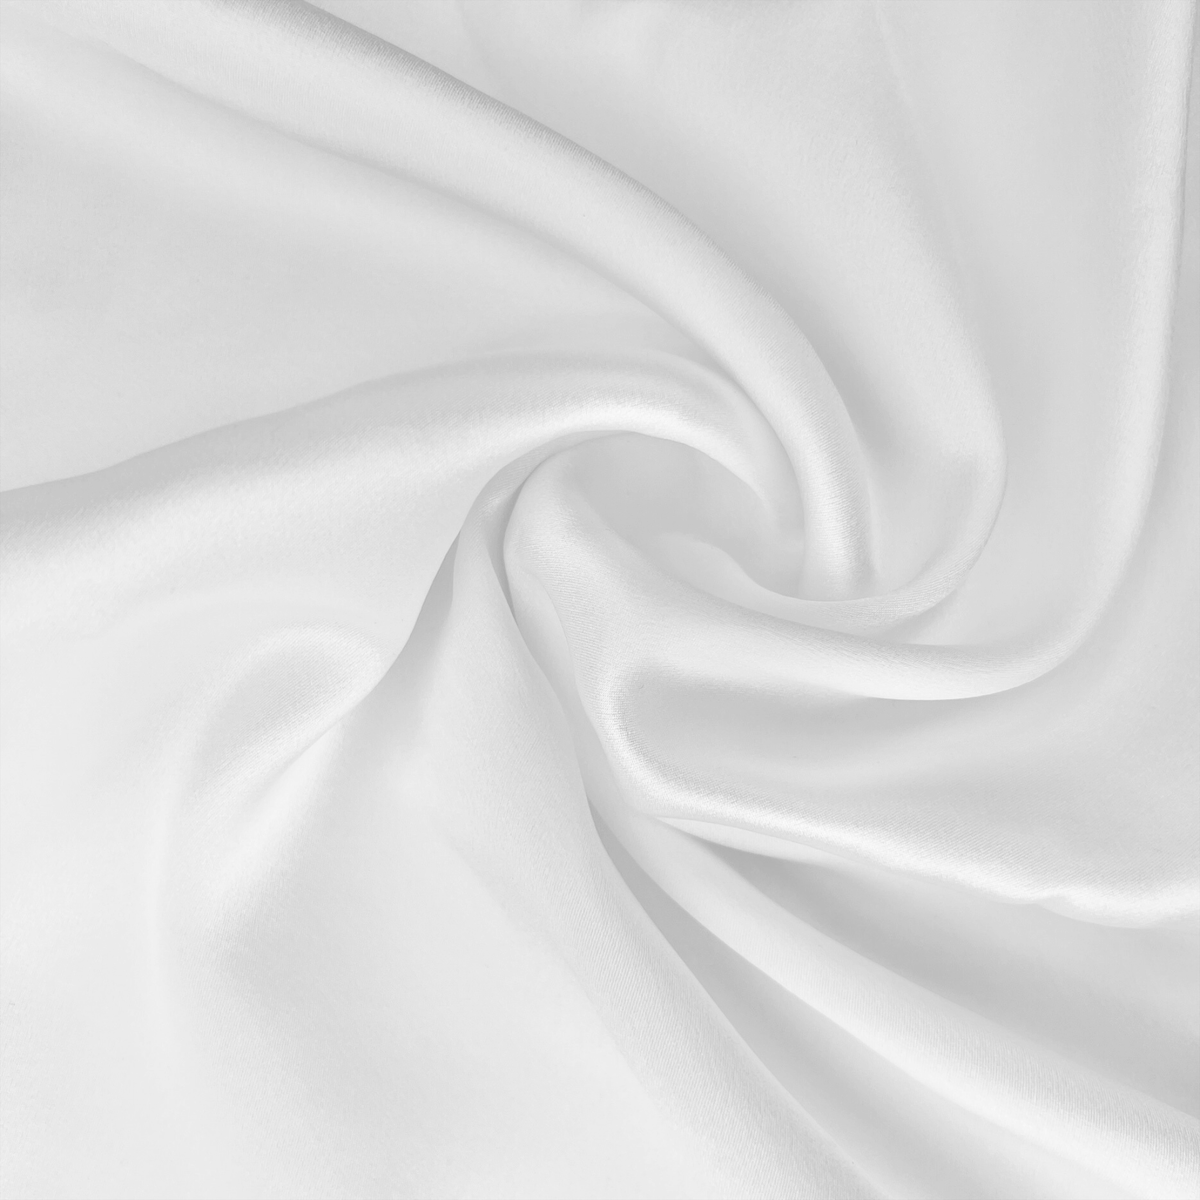 Swatch Sample of White Mulberry Park Silks 30 Momme Silk Sheet Set